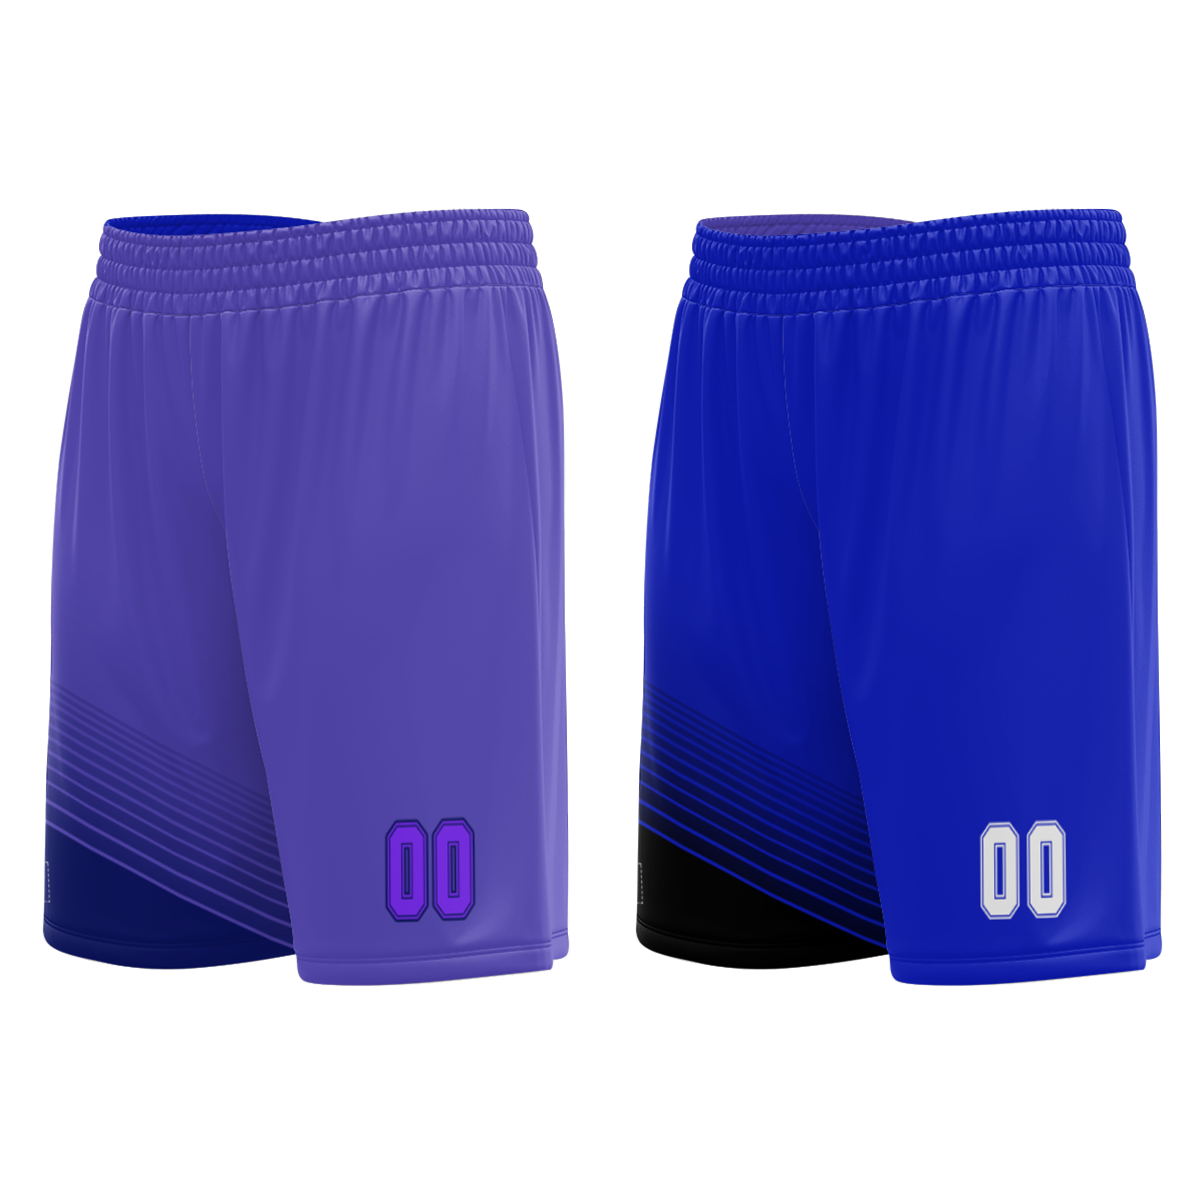 the-latest-custom-sublimated-basketball-jerseys-printed-reversible-basketball-uniforms-at-cj-pod-8